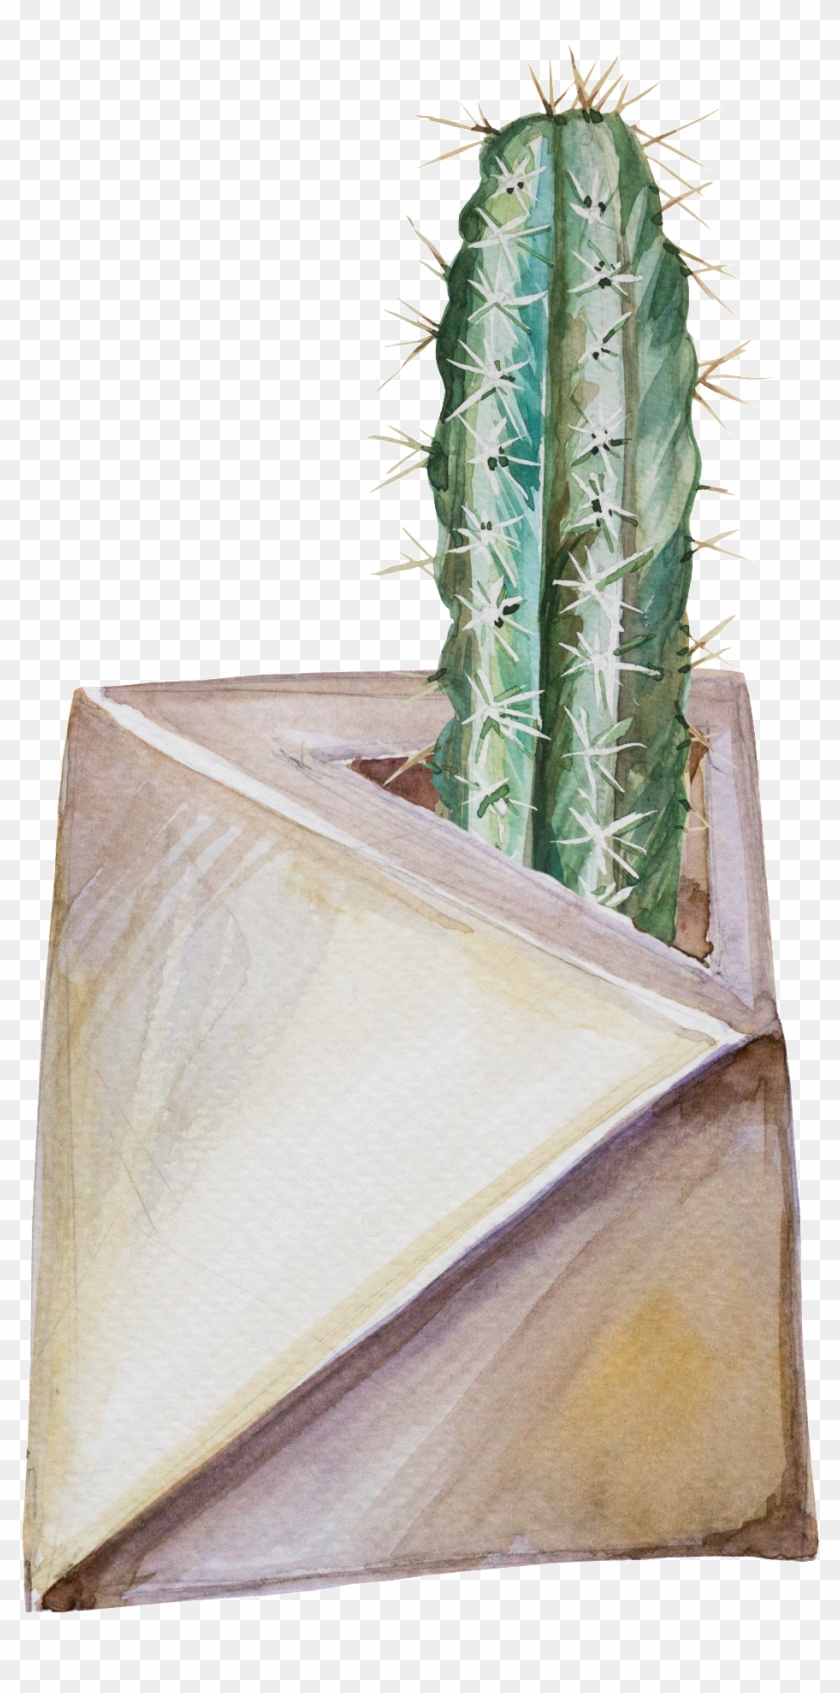 Exquisite Hand Painted Plant Potted Transparent - Cactus Clipart #136616